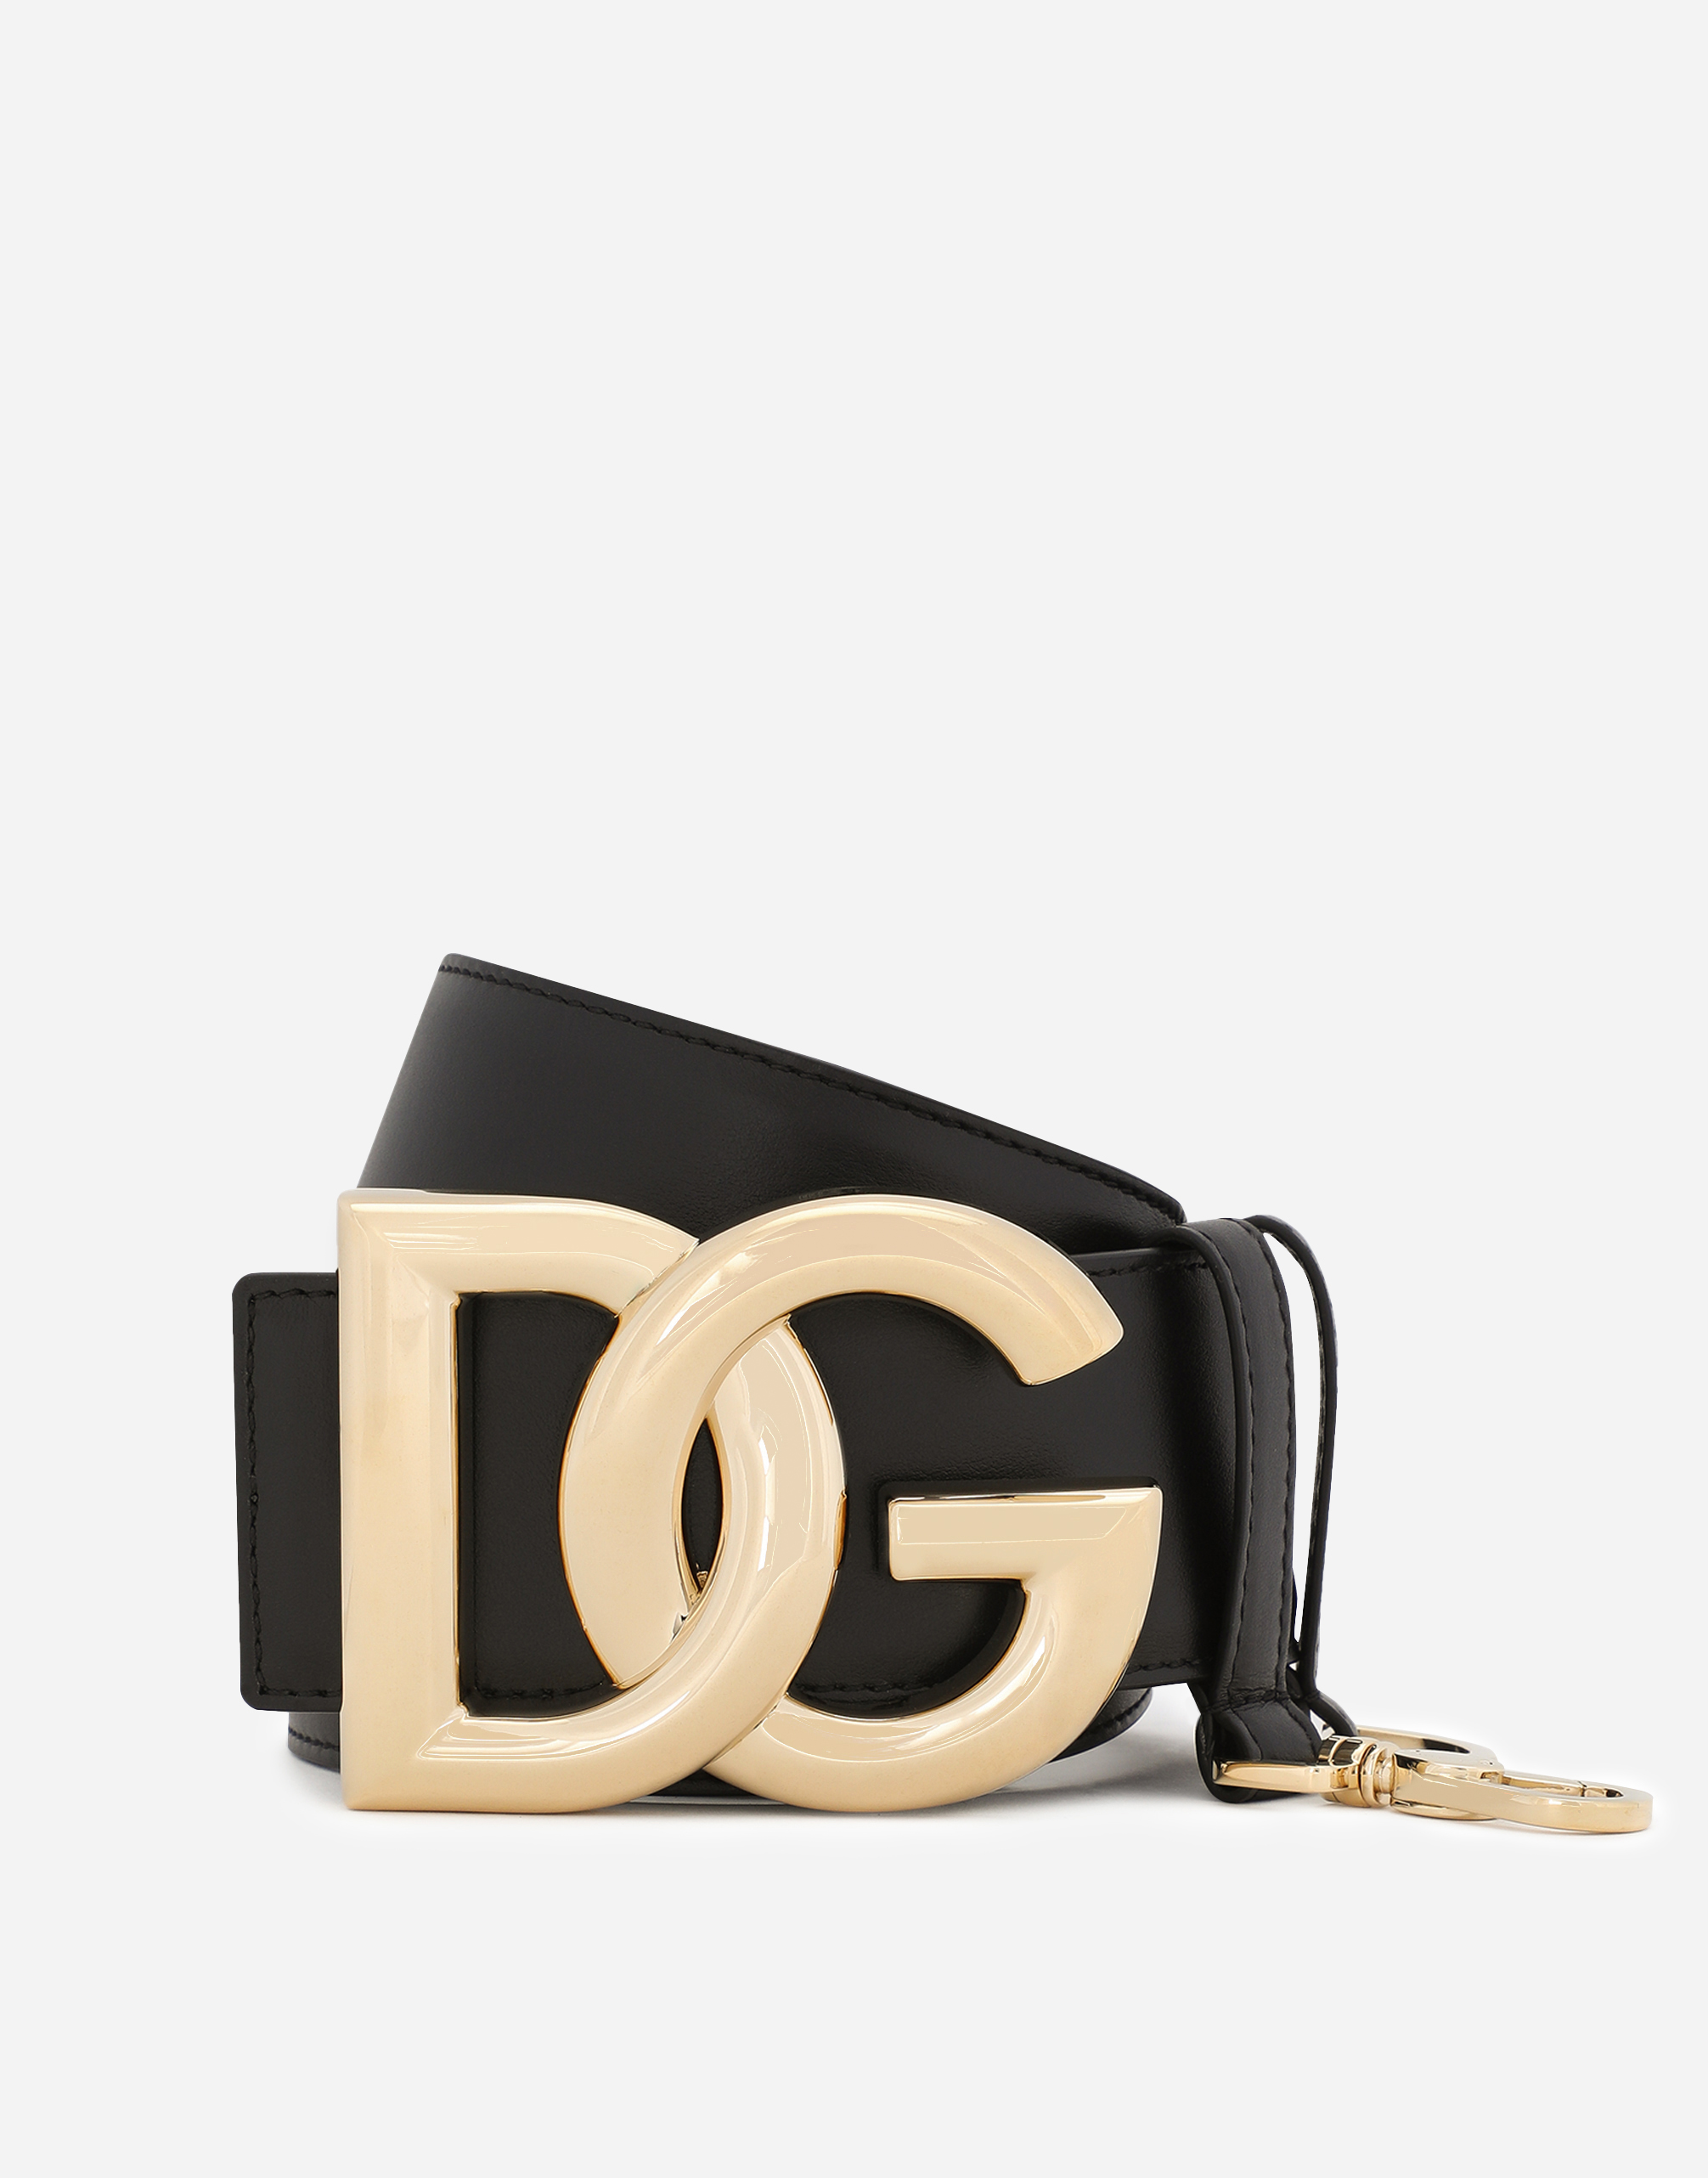 Calfskin belt with DG logo in Black